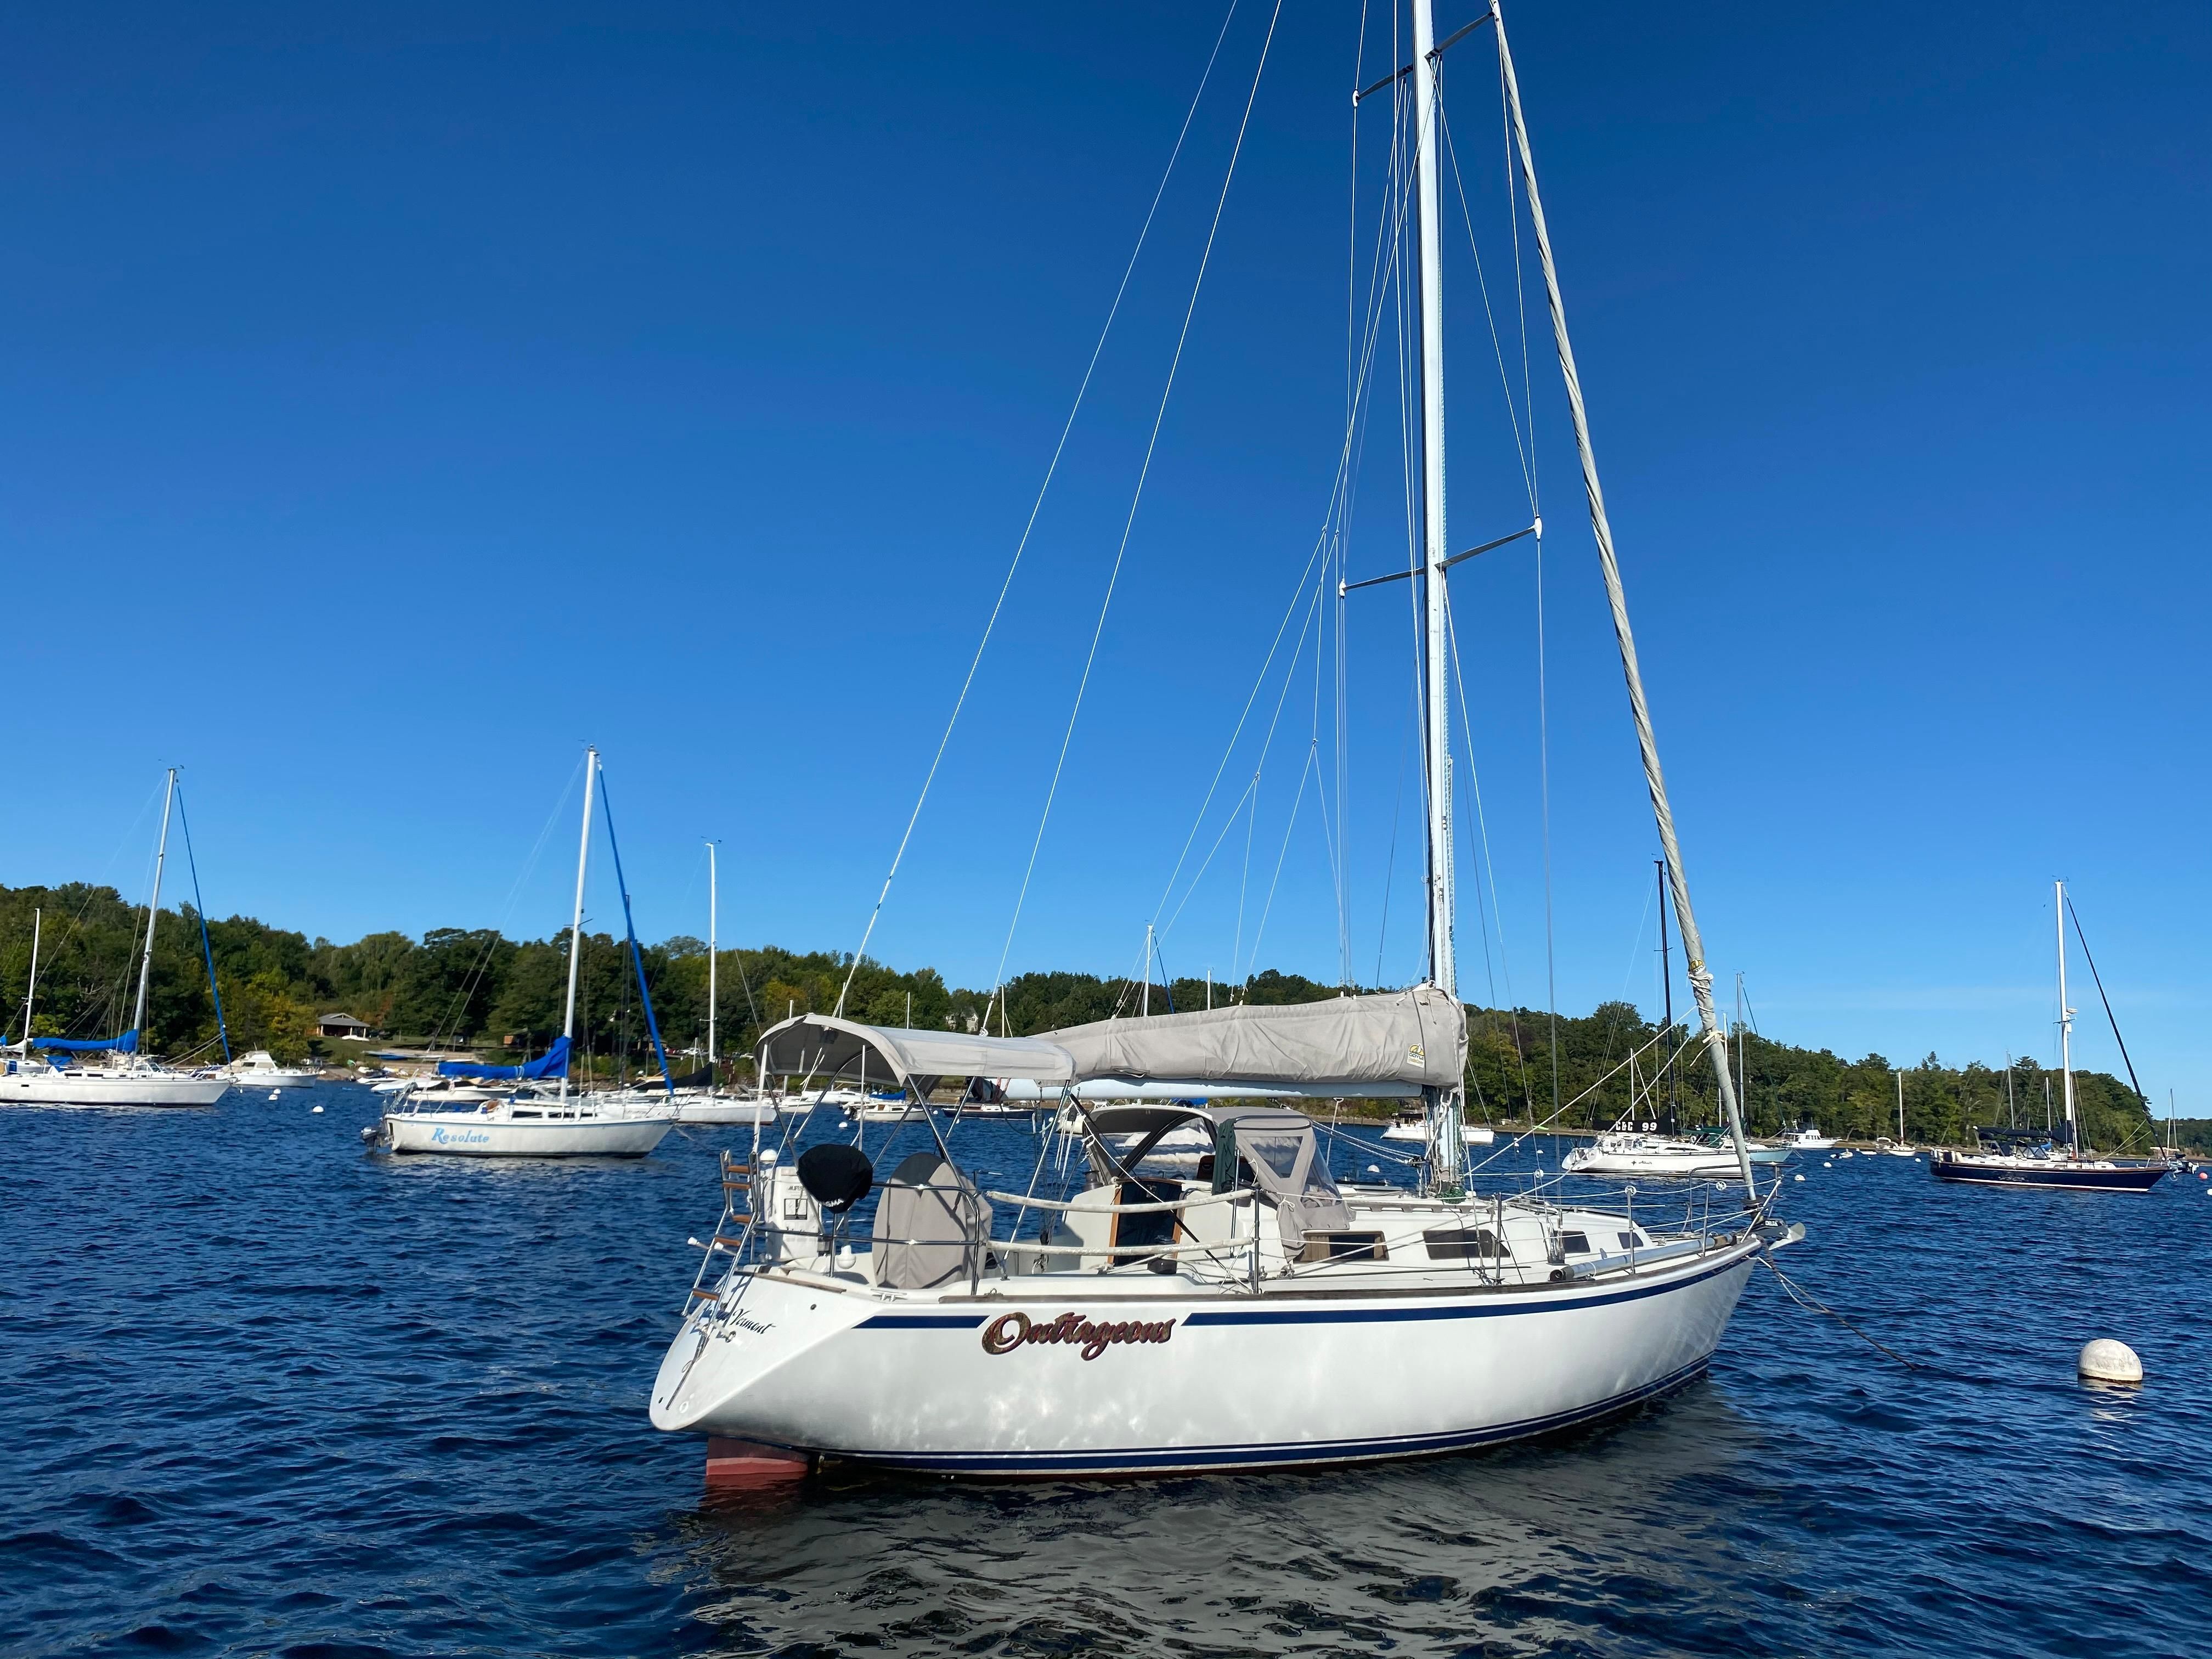 pearson 37 sailboat for sale